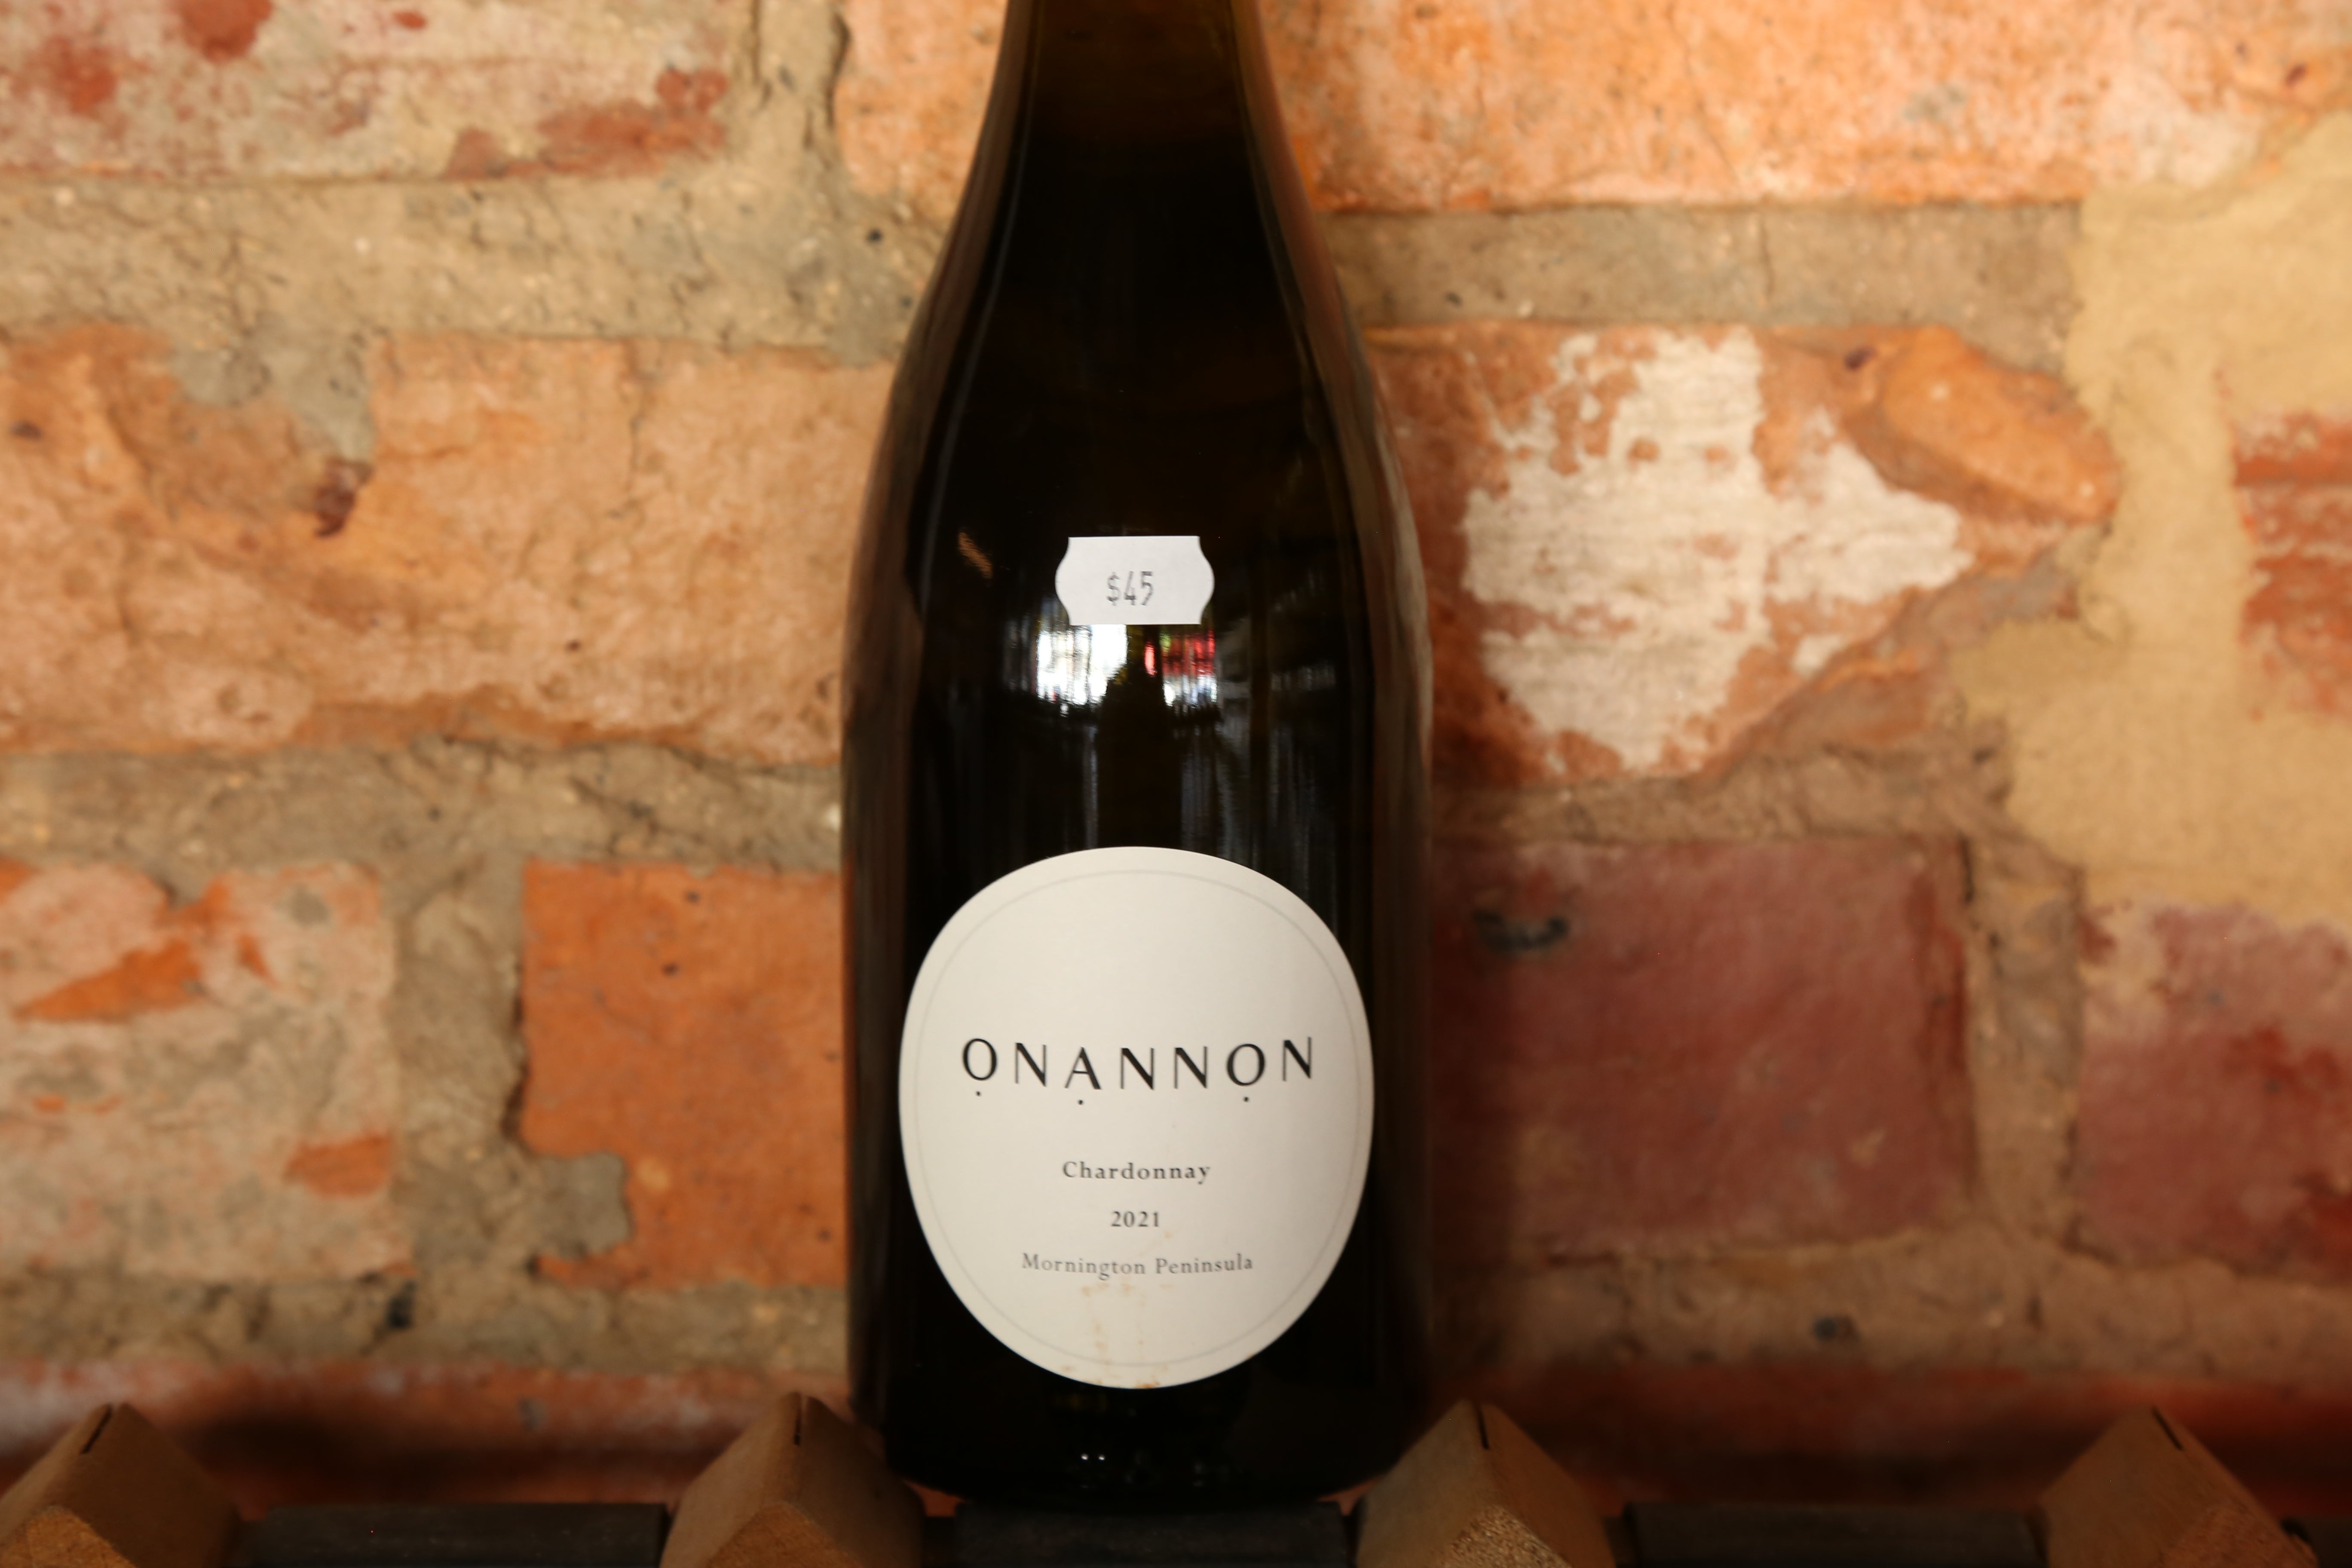 Onannon Mornington Chardonnay 2021